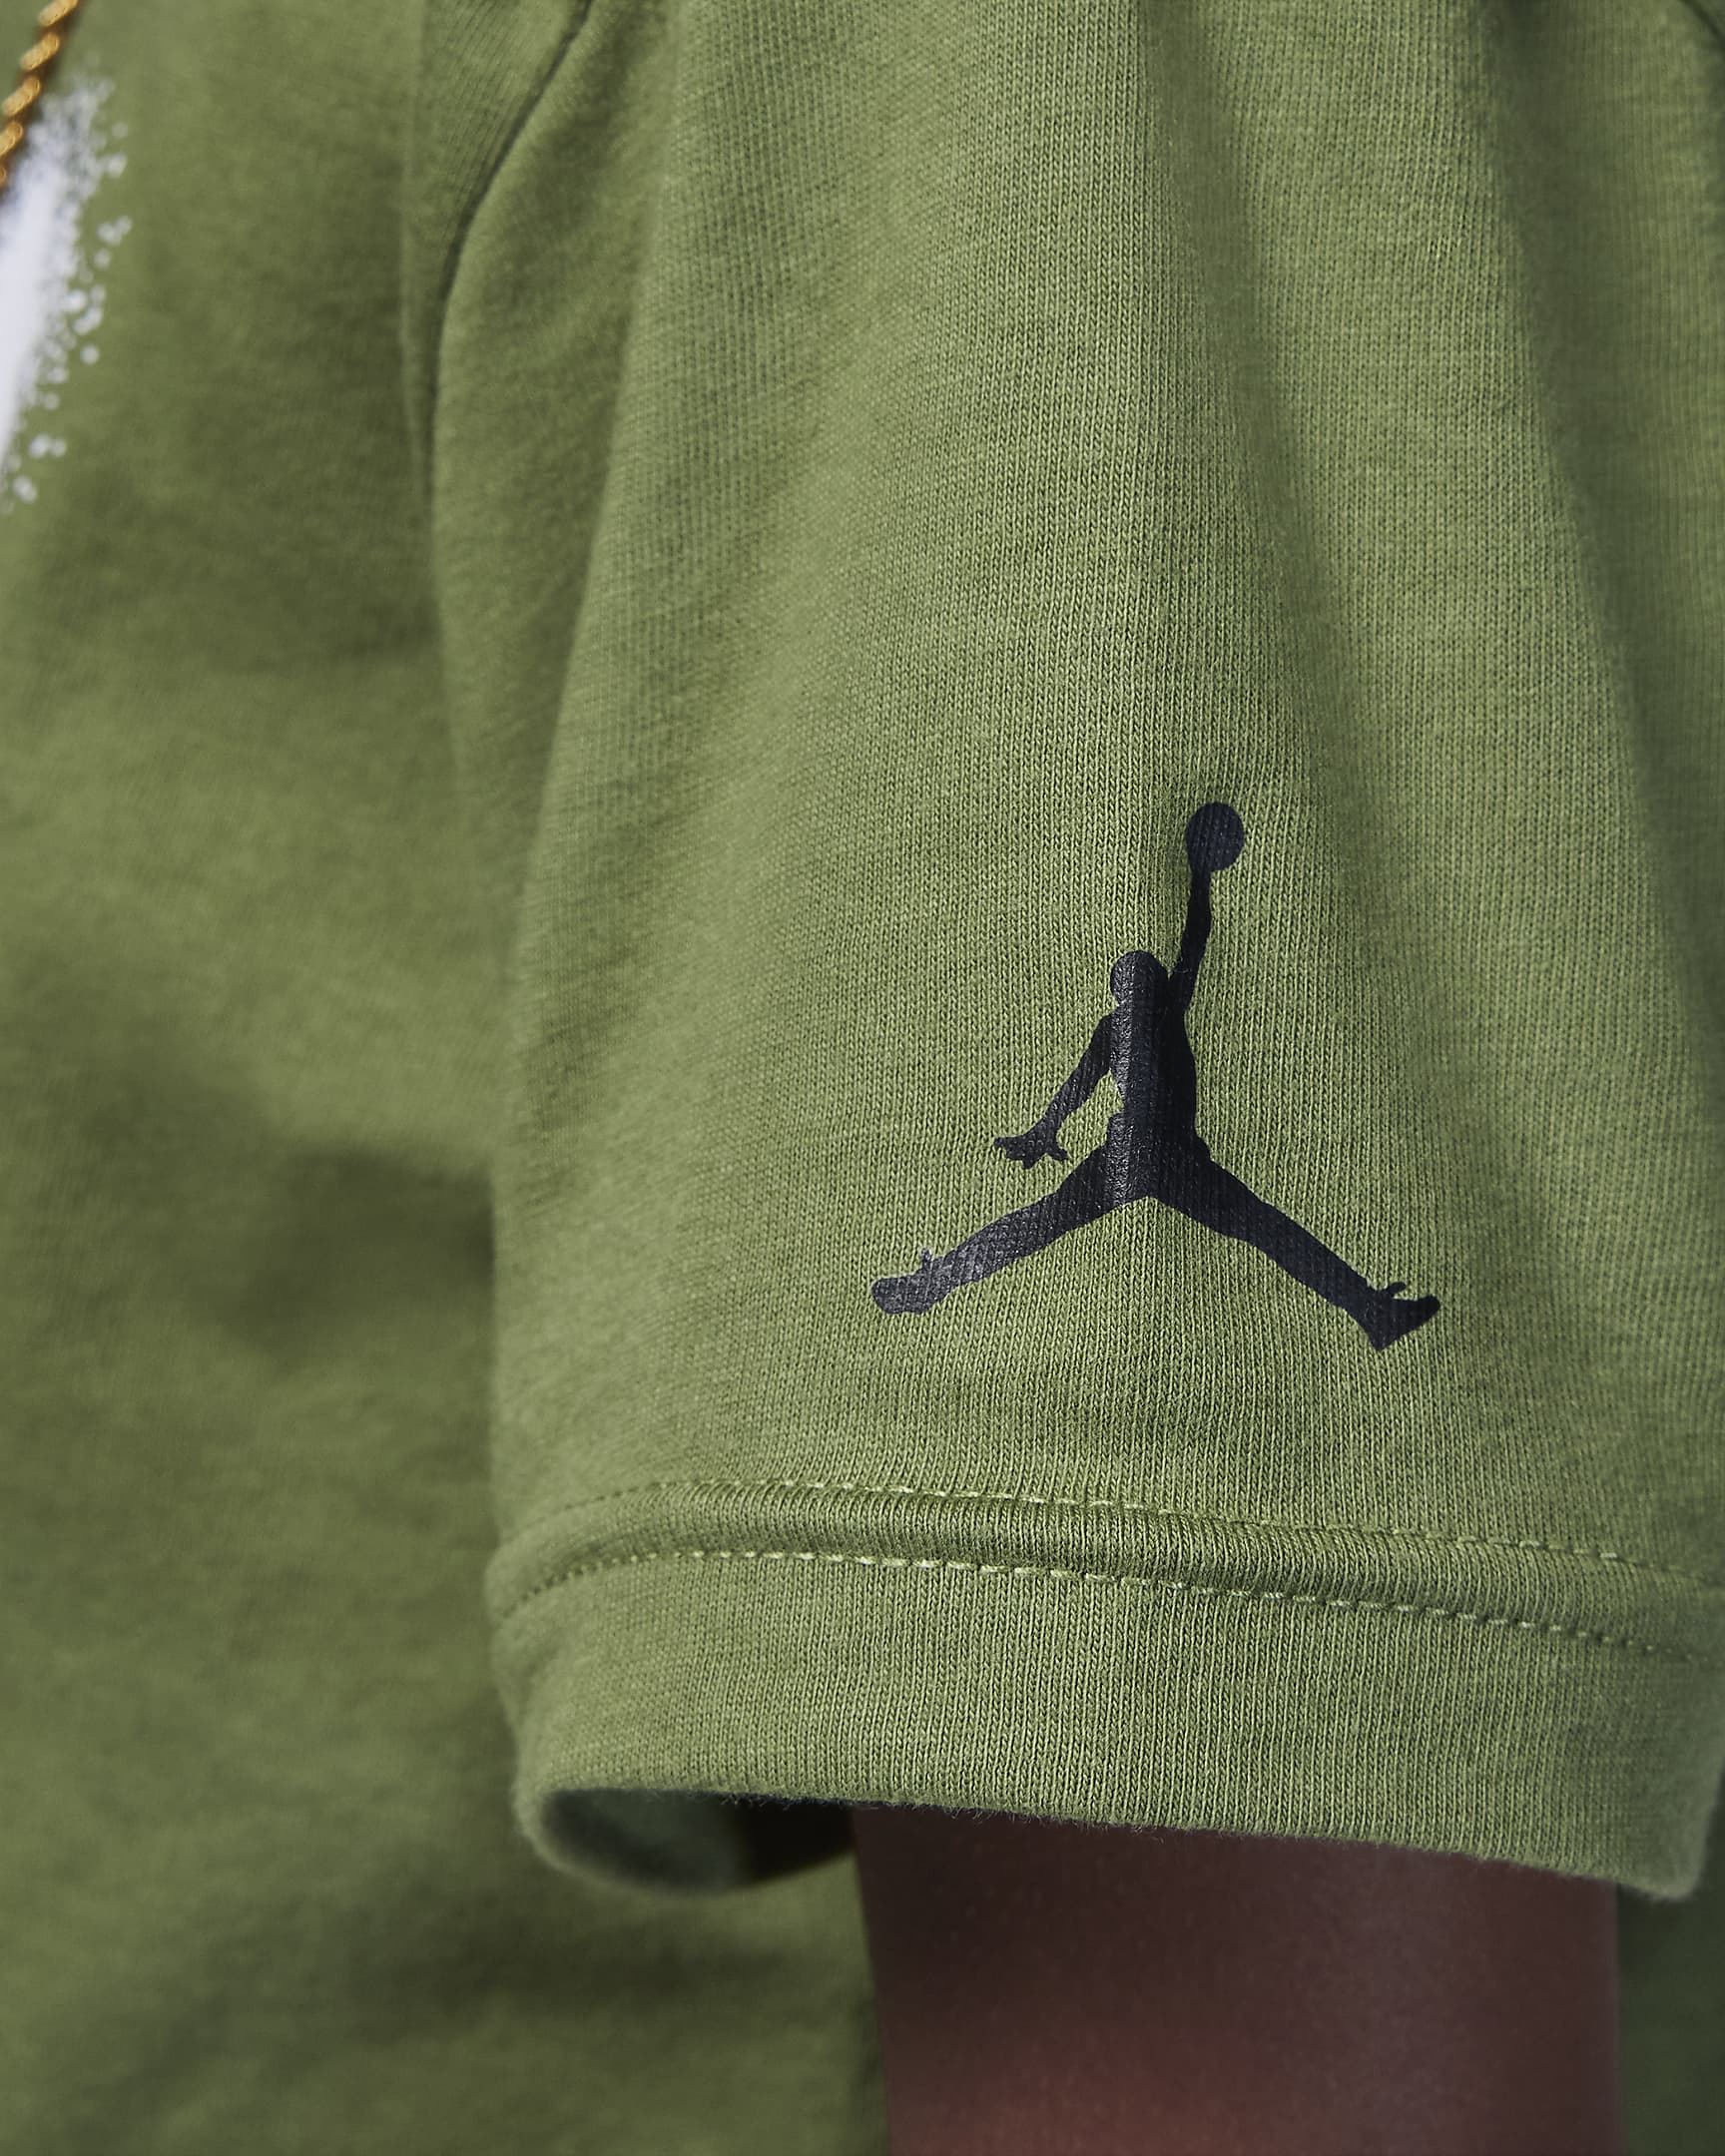 Jordan Jumpman Flight Sprayed Tee Younger Kids' T-Shirt. Nike UK